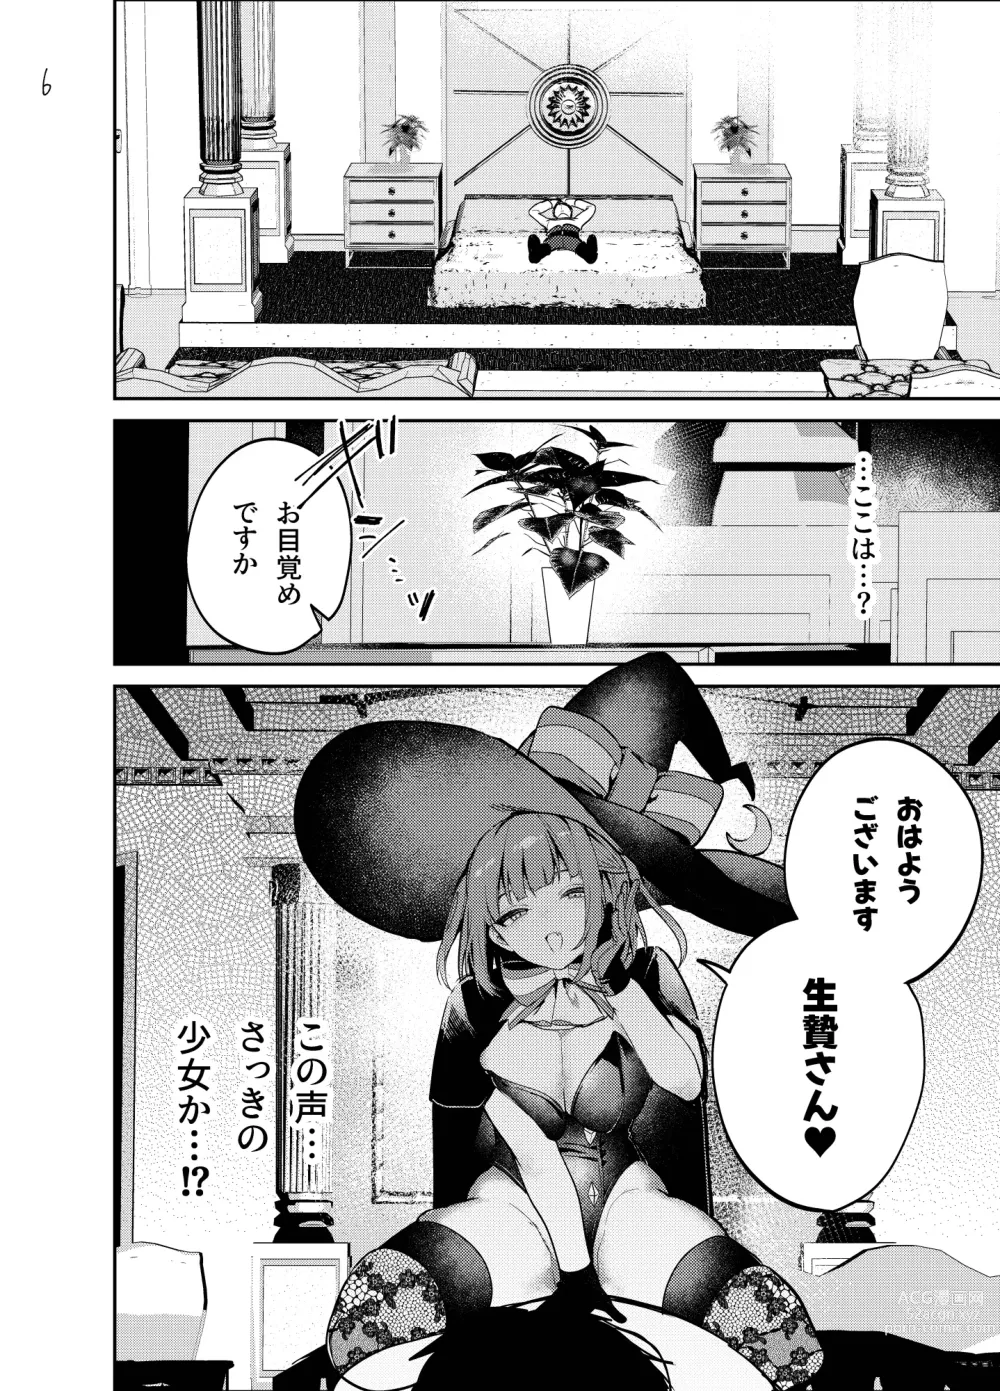 Page 6 of doujinshi Nightmare Before Christmas